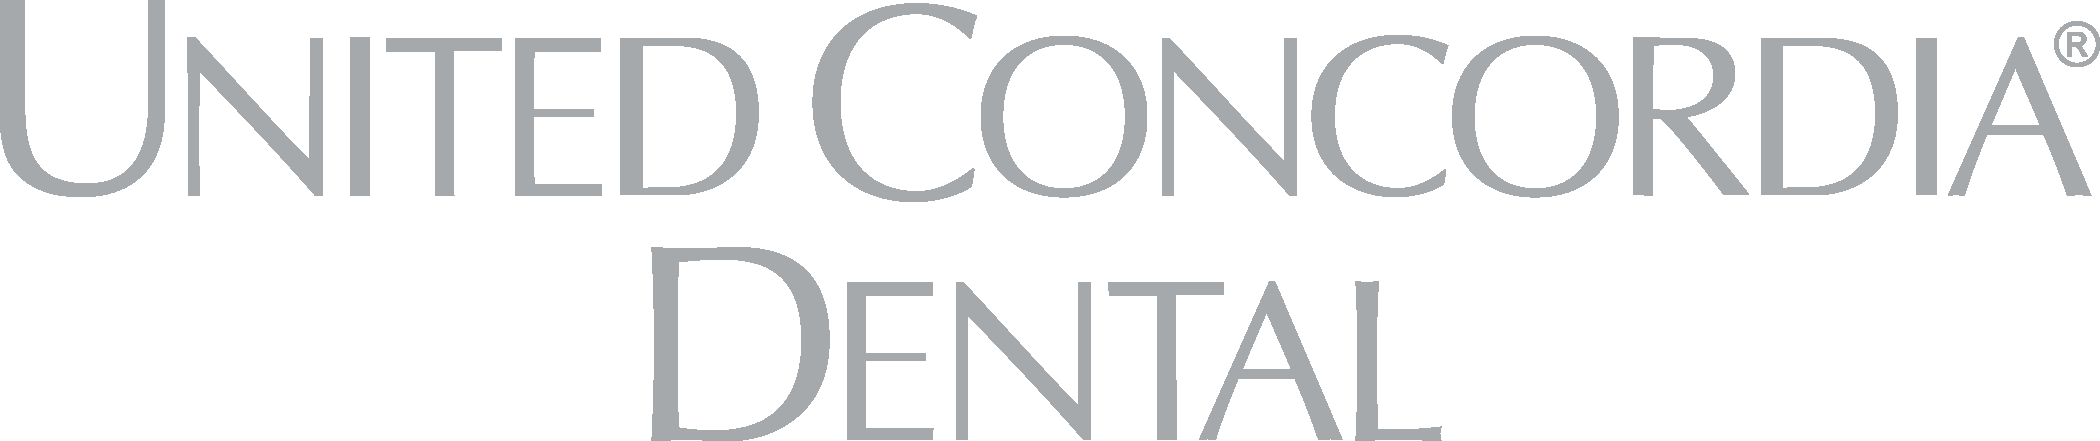 United Concordia Dental Logo